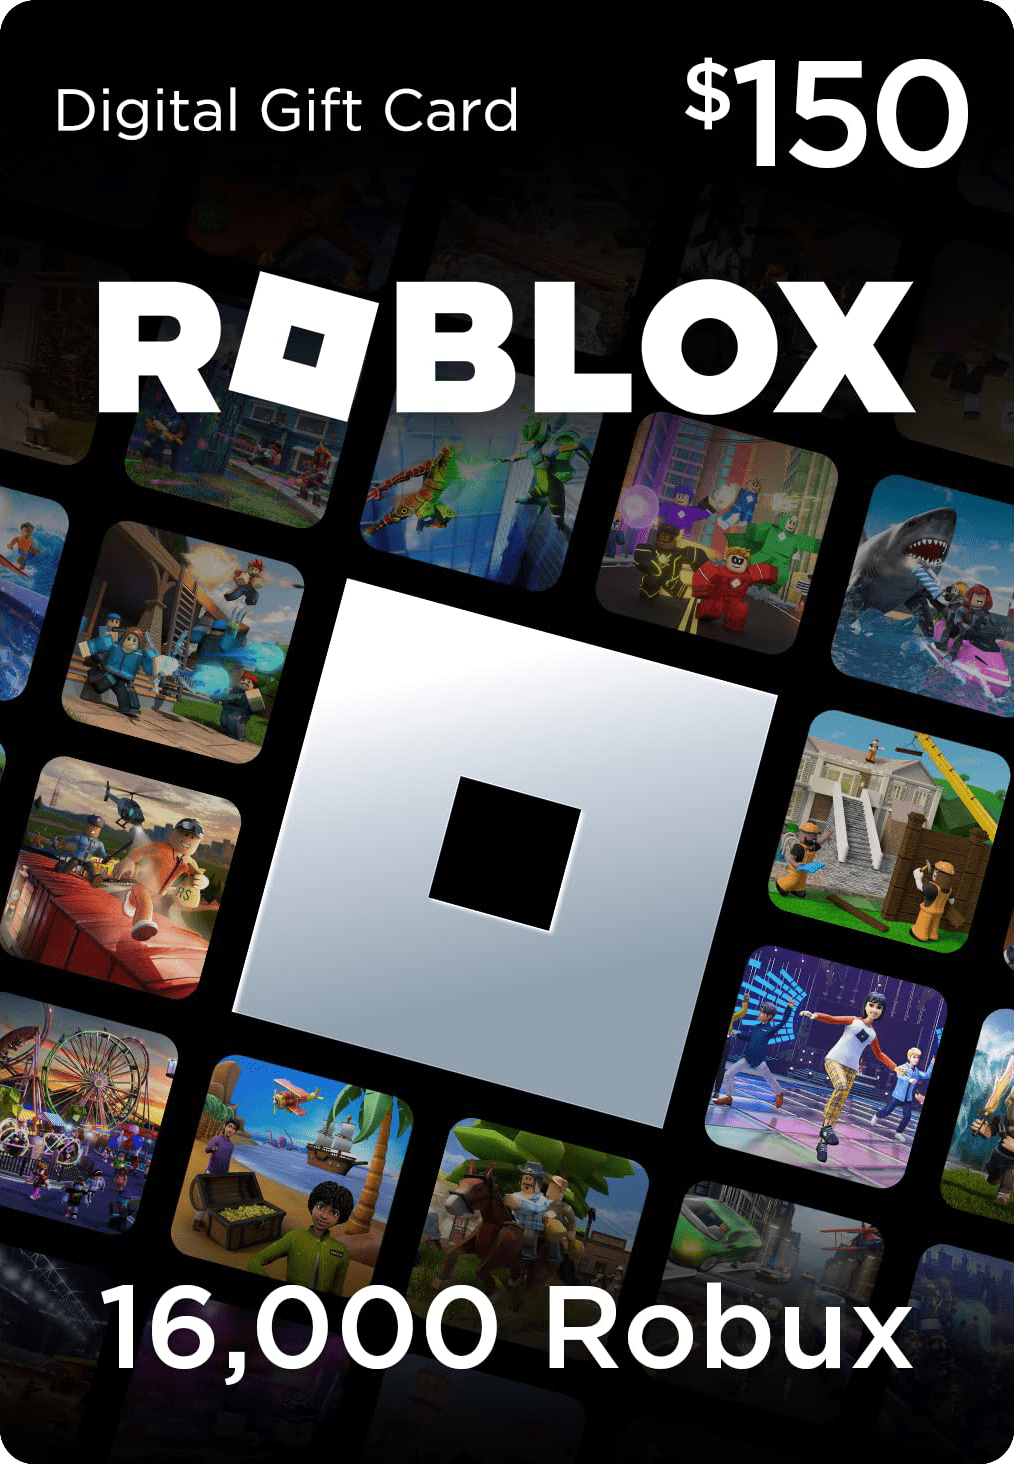 Roblox Digital Gift Card | 16,000 Robux